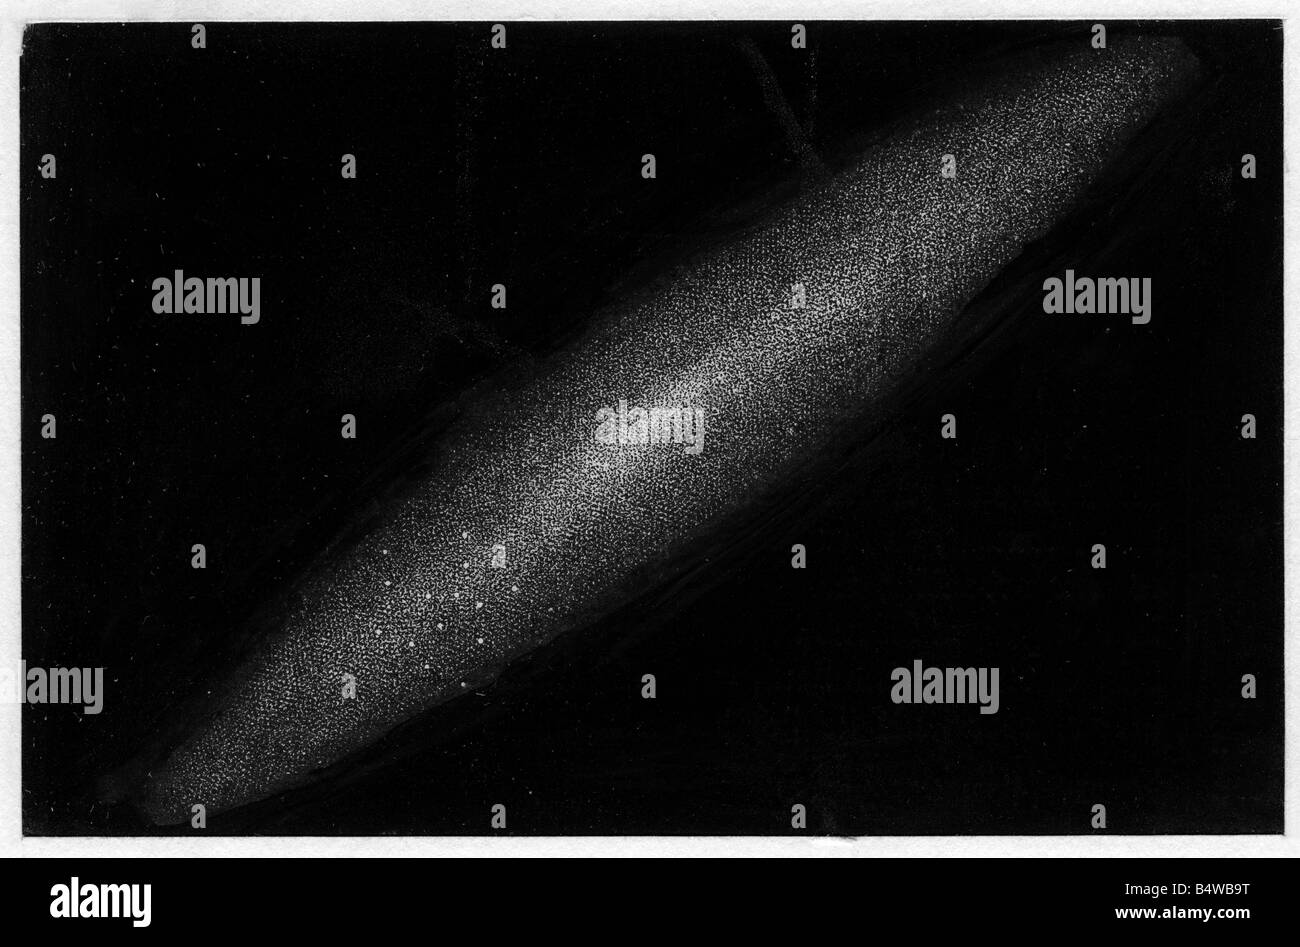 astromomy, constellations, Andromeda Nebula, engraving, 19th century, stars, constellation, science, historic, istorical, Stock Photo